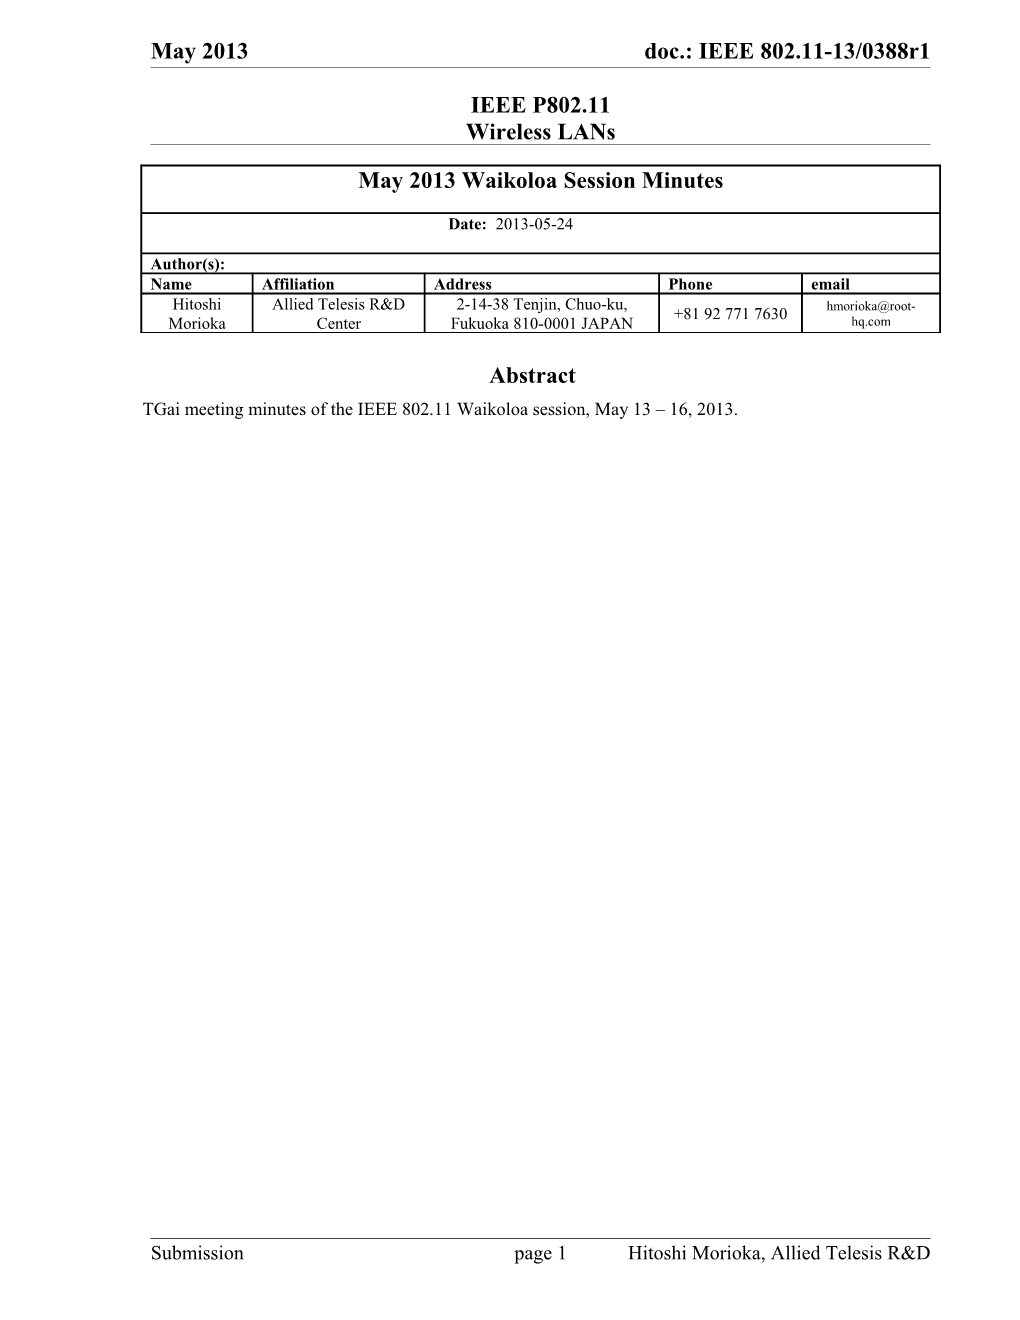 Tgai May 2013 Waikoloa Meeting Minutes